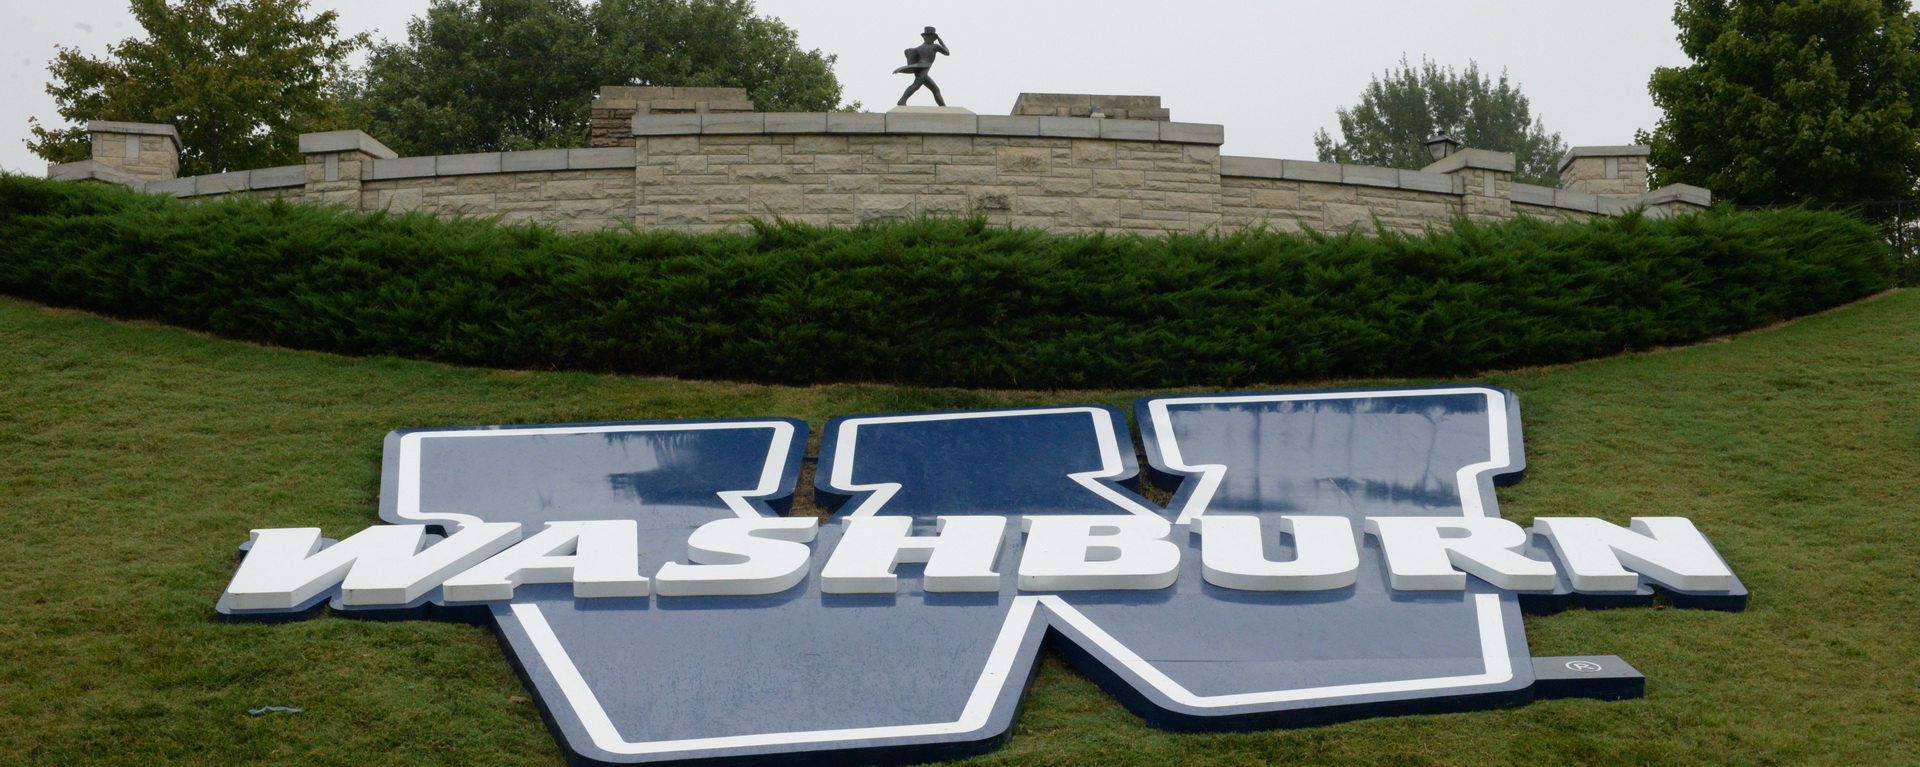 Washburn University sports logo at football field